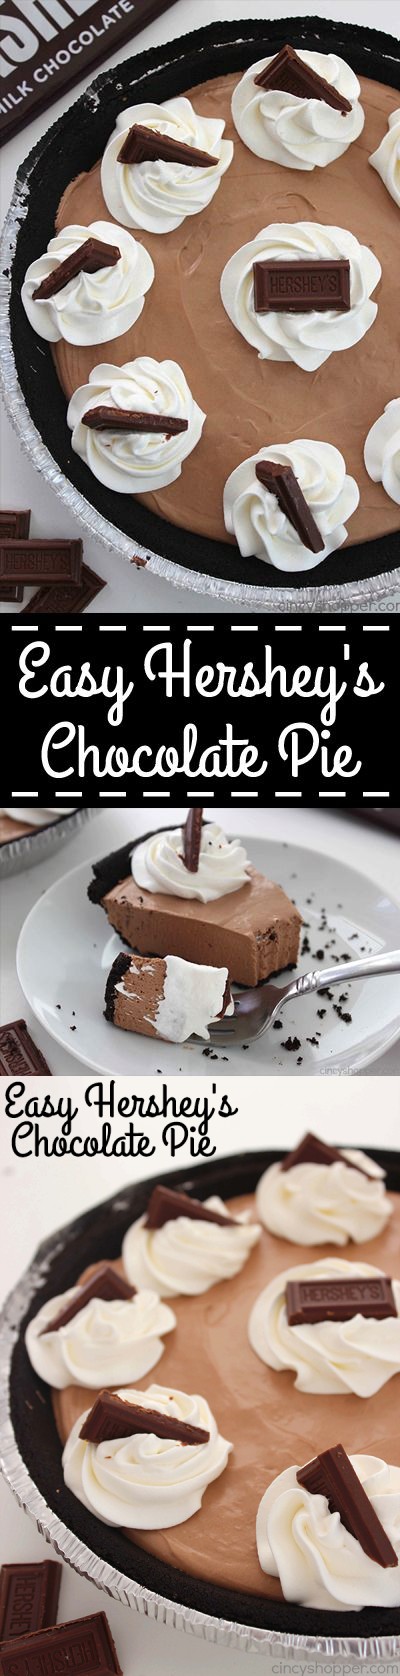 Easy Hershey’s Chocolate Pie